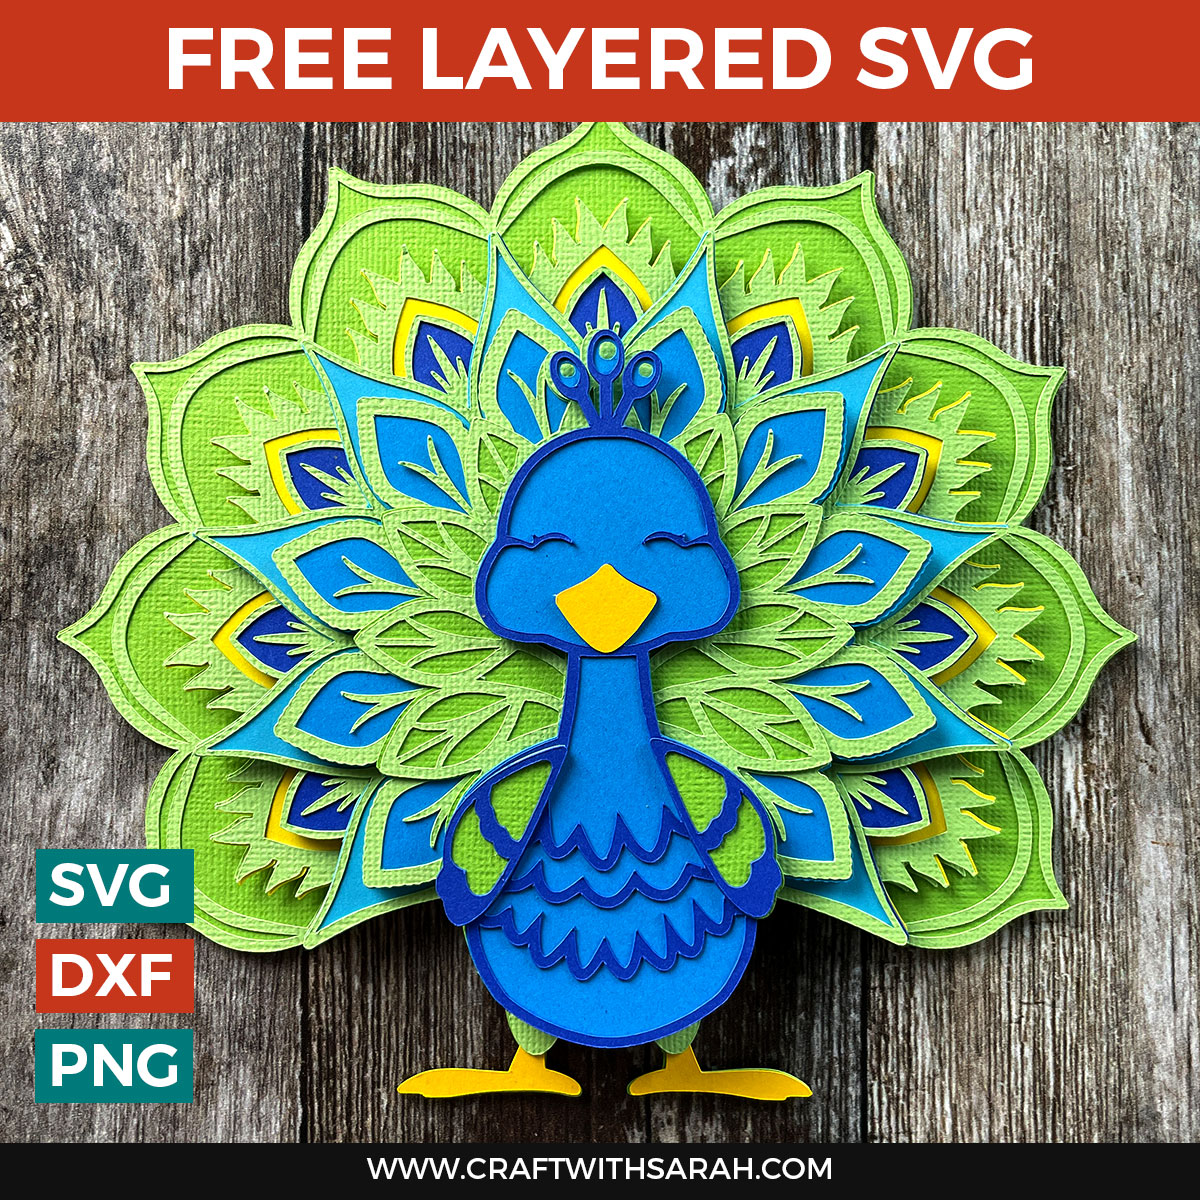 Free Layered Peacock SVG | Intricate Mandala Feathers Peacock